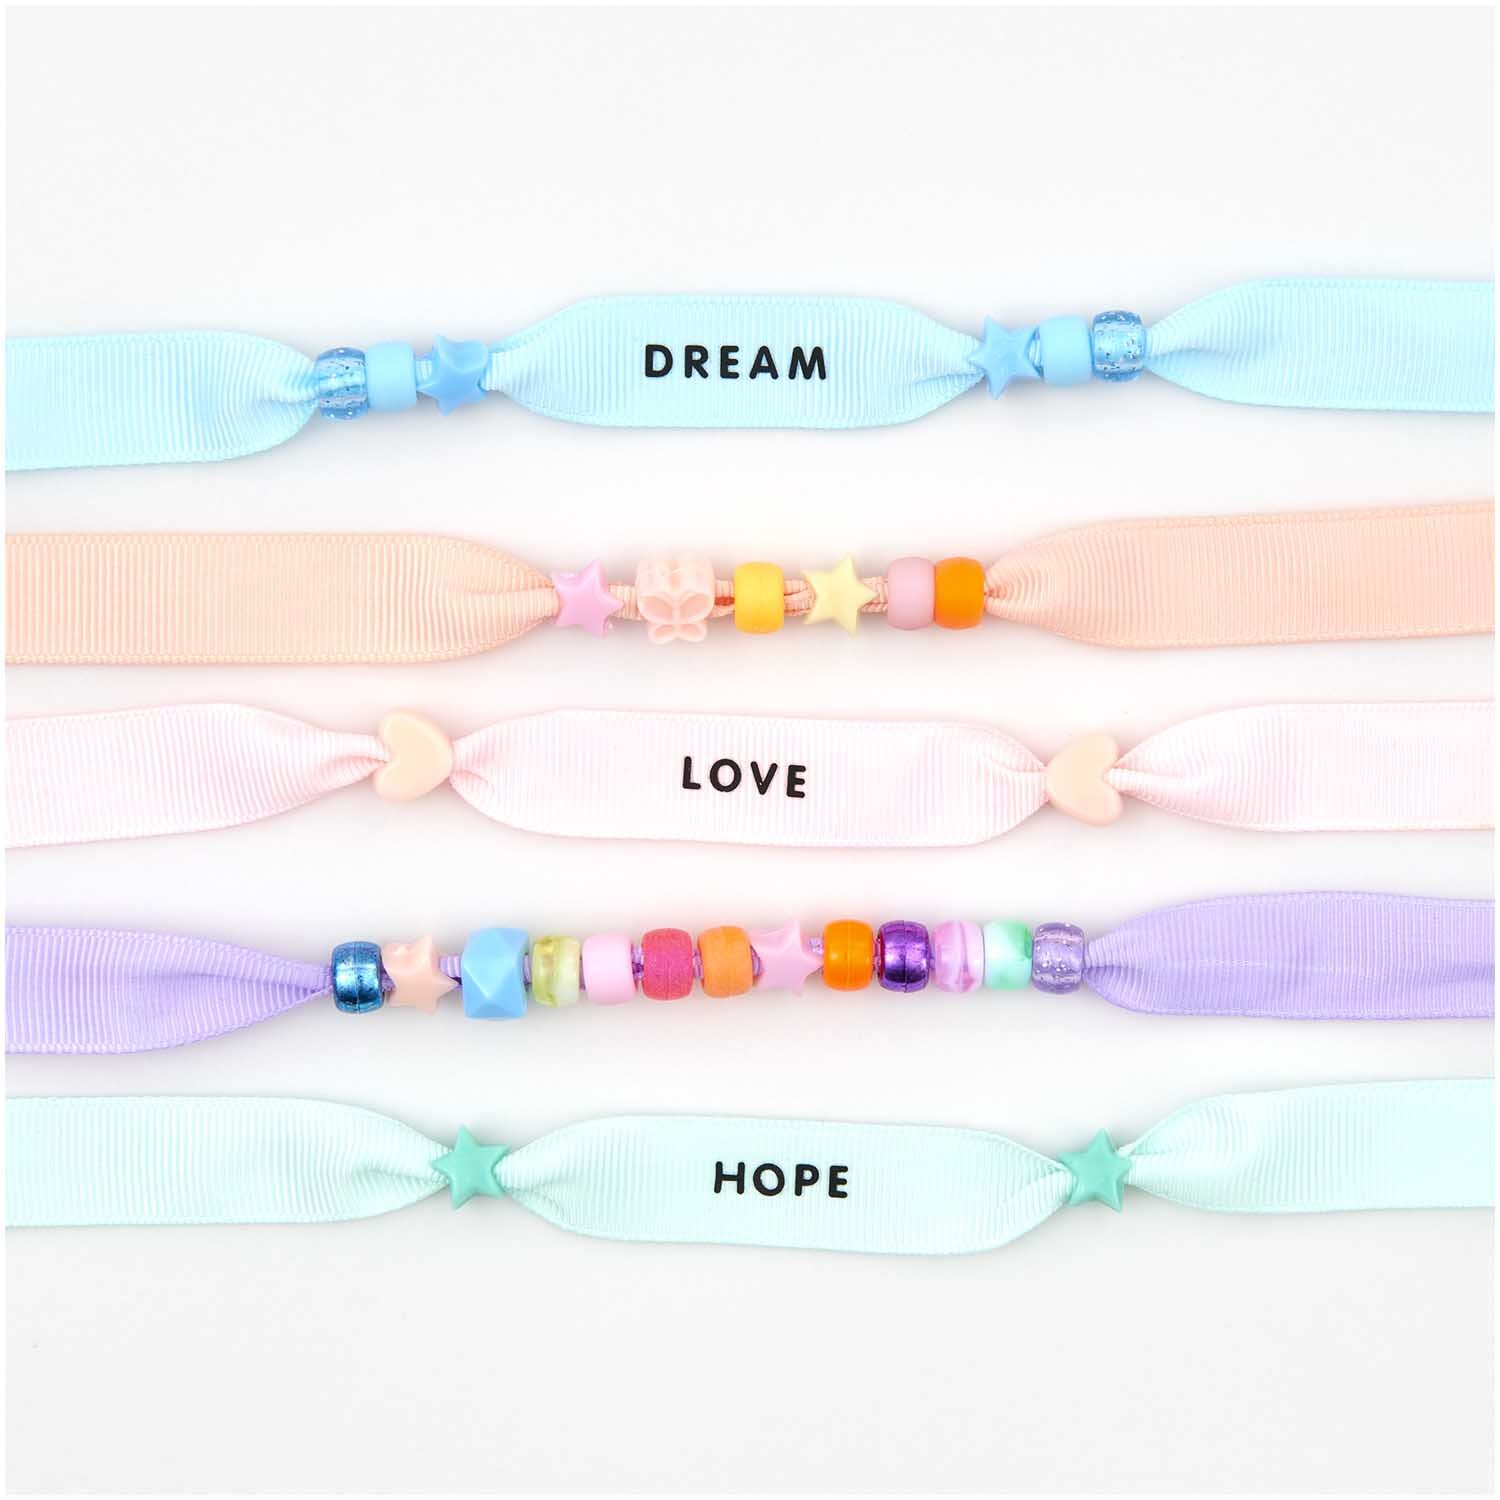 itoshii - Ponii Beads Ripsband Armbänder pastell 10 Stück